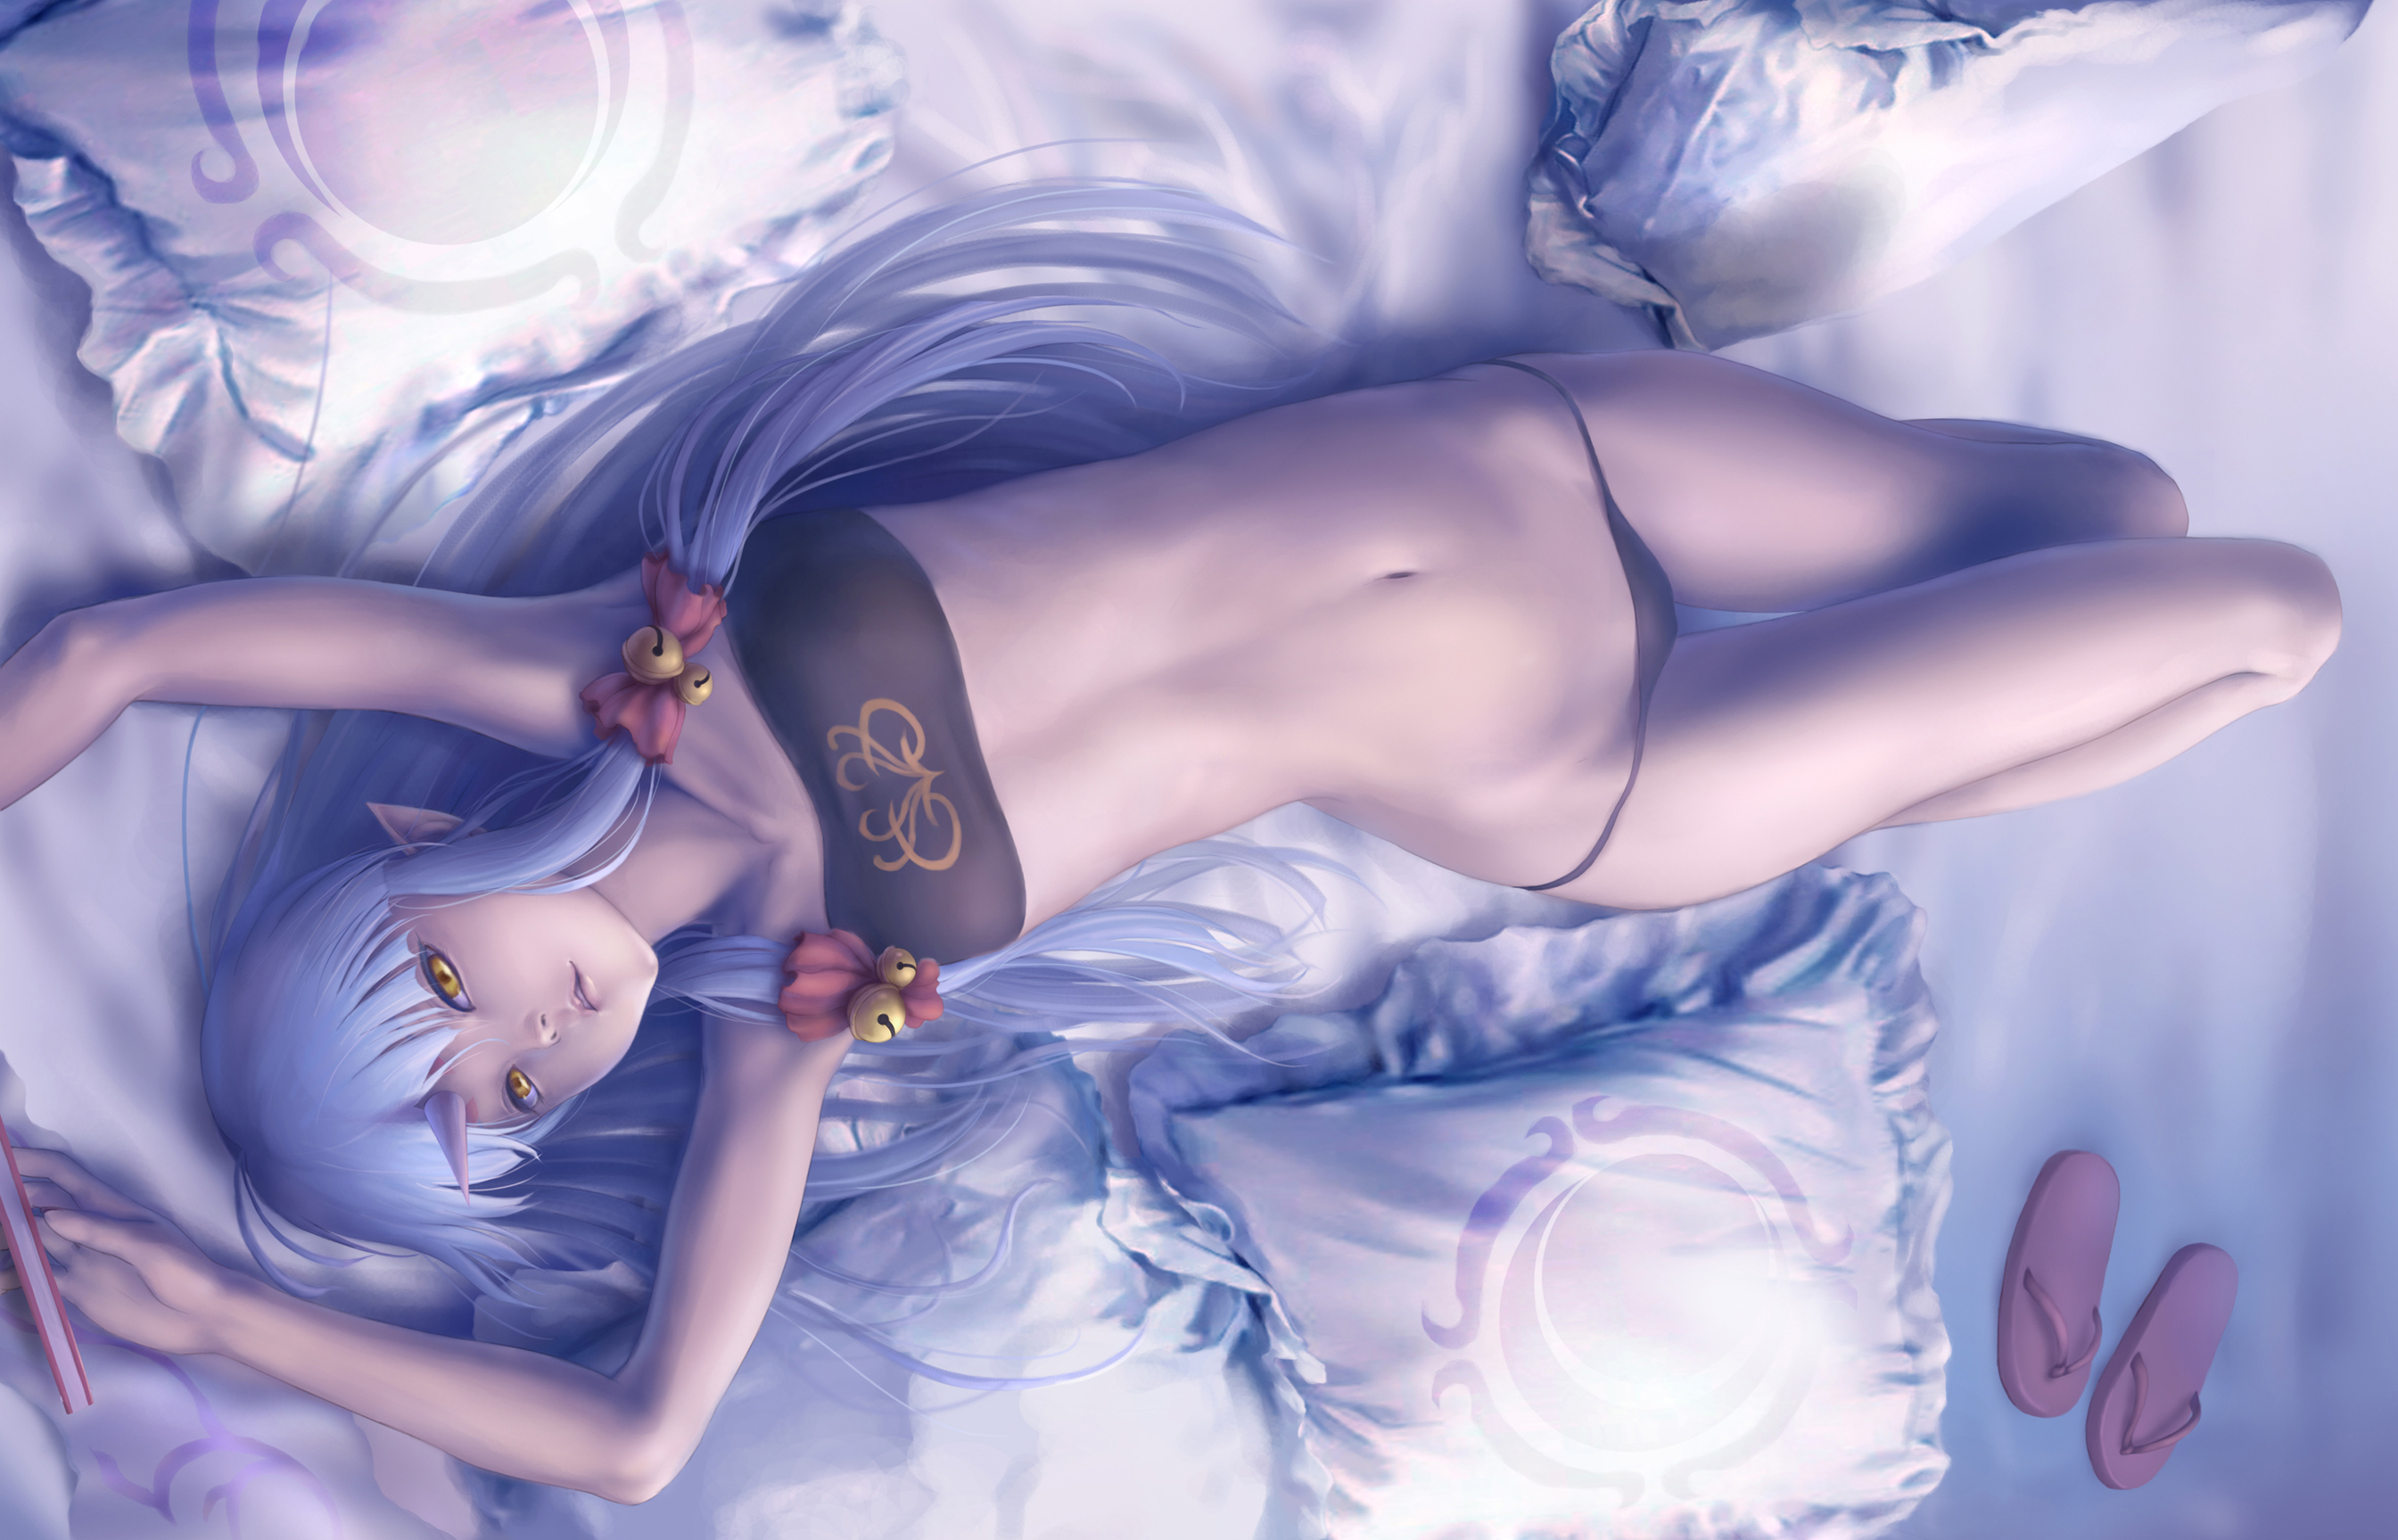 Anime 2689x1727 anime girls Super Robot Taisen Suzuka Hime video games lying down bed long hair blue hair horns pillow bells pointy ears belly button lingerie panties Nyarko